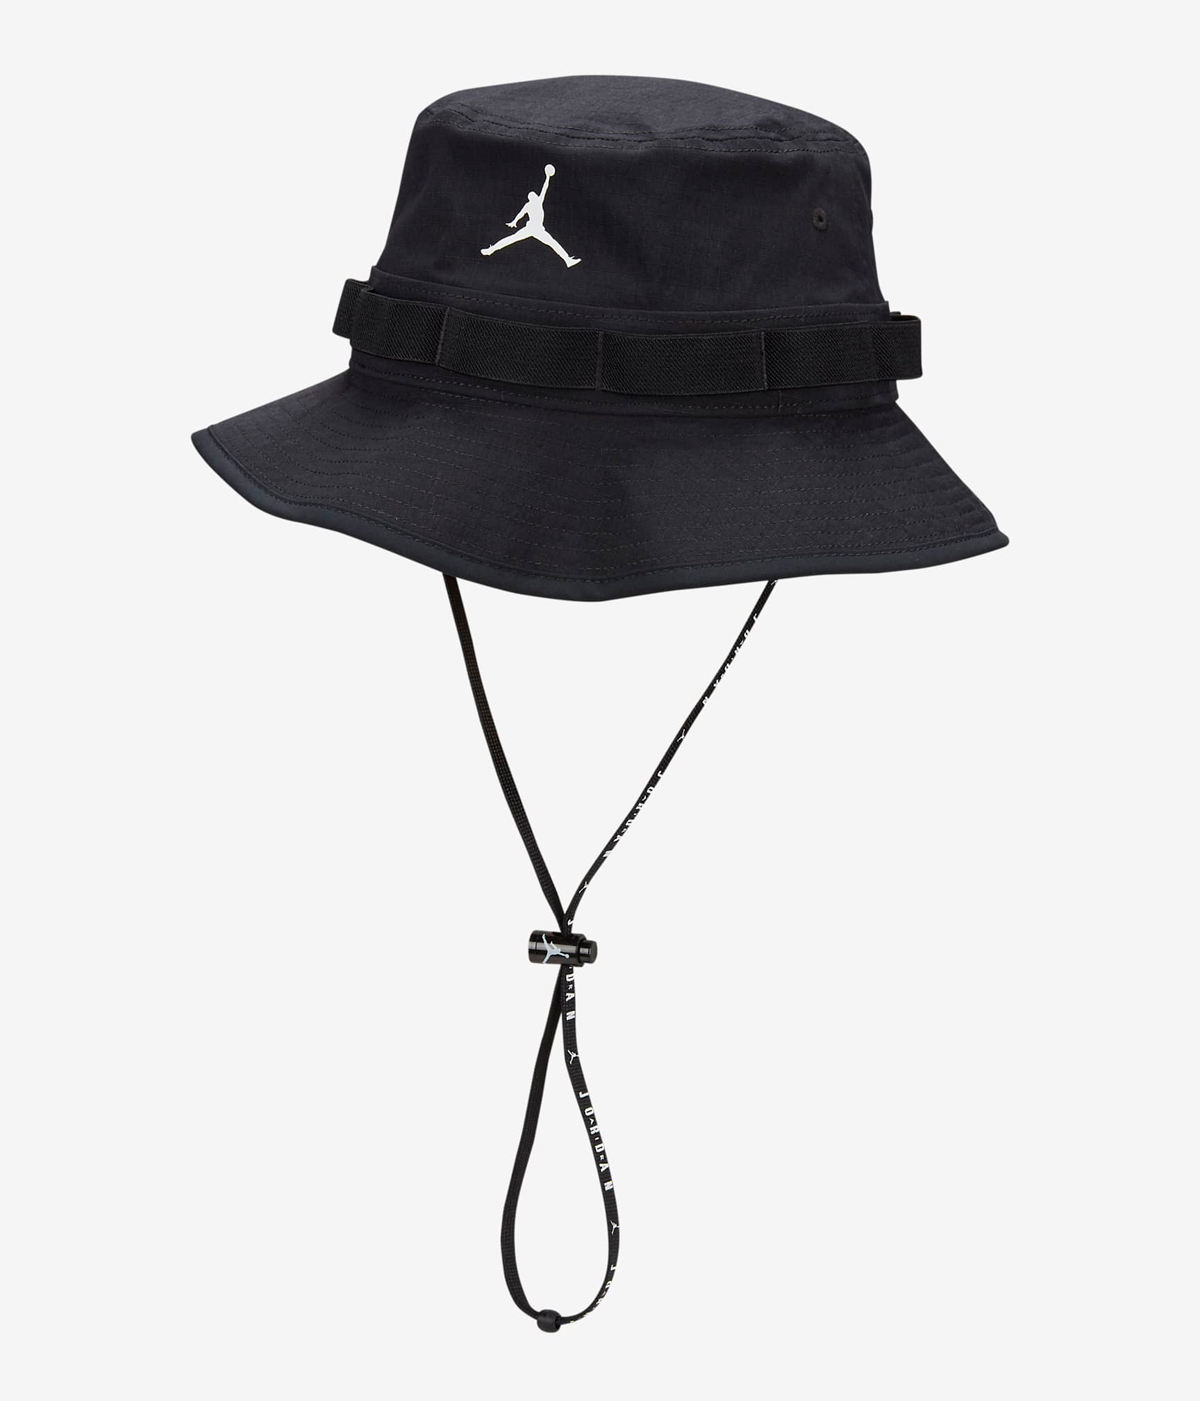 Jordan-Apex-Bucket-Hat-Black-White